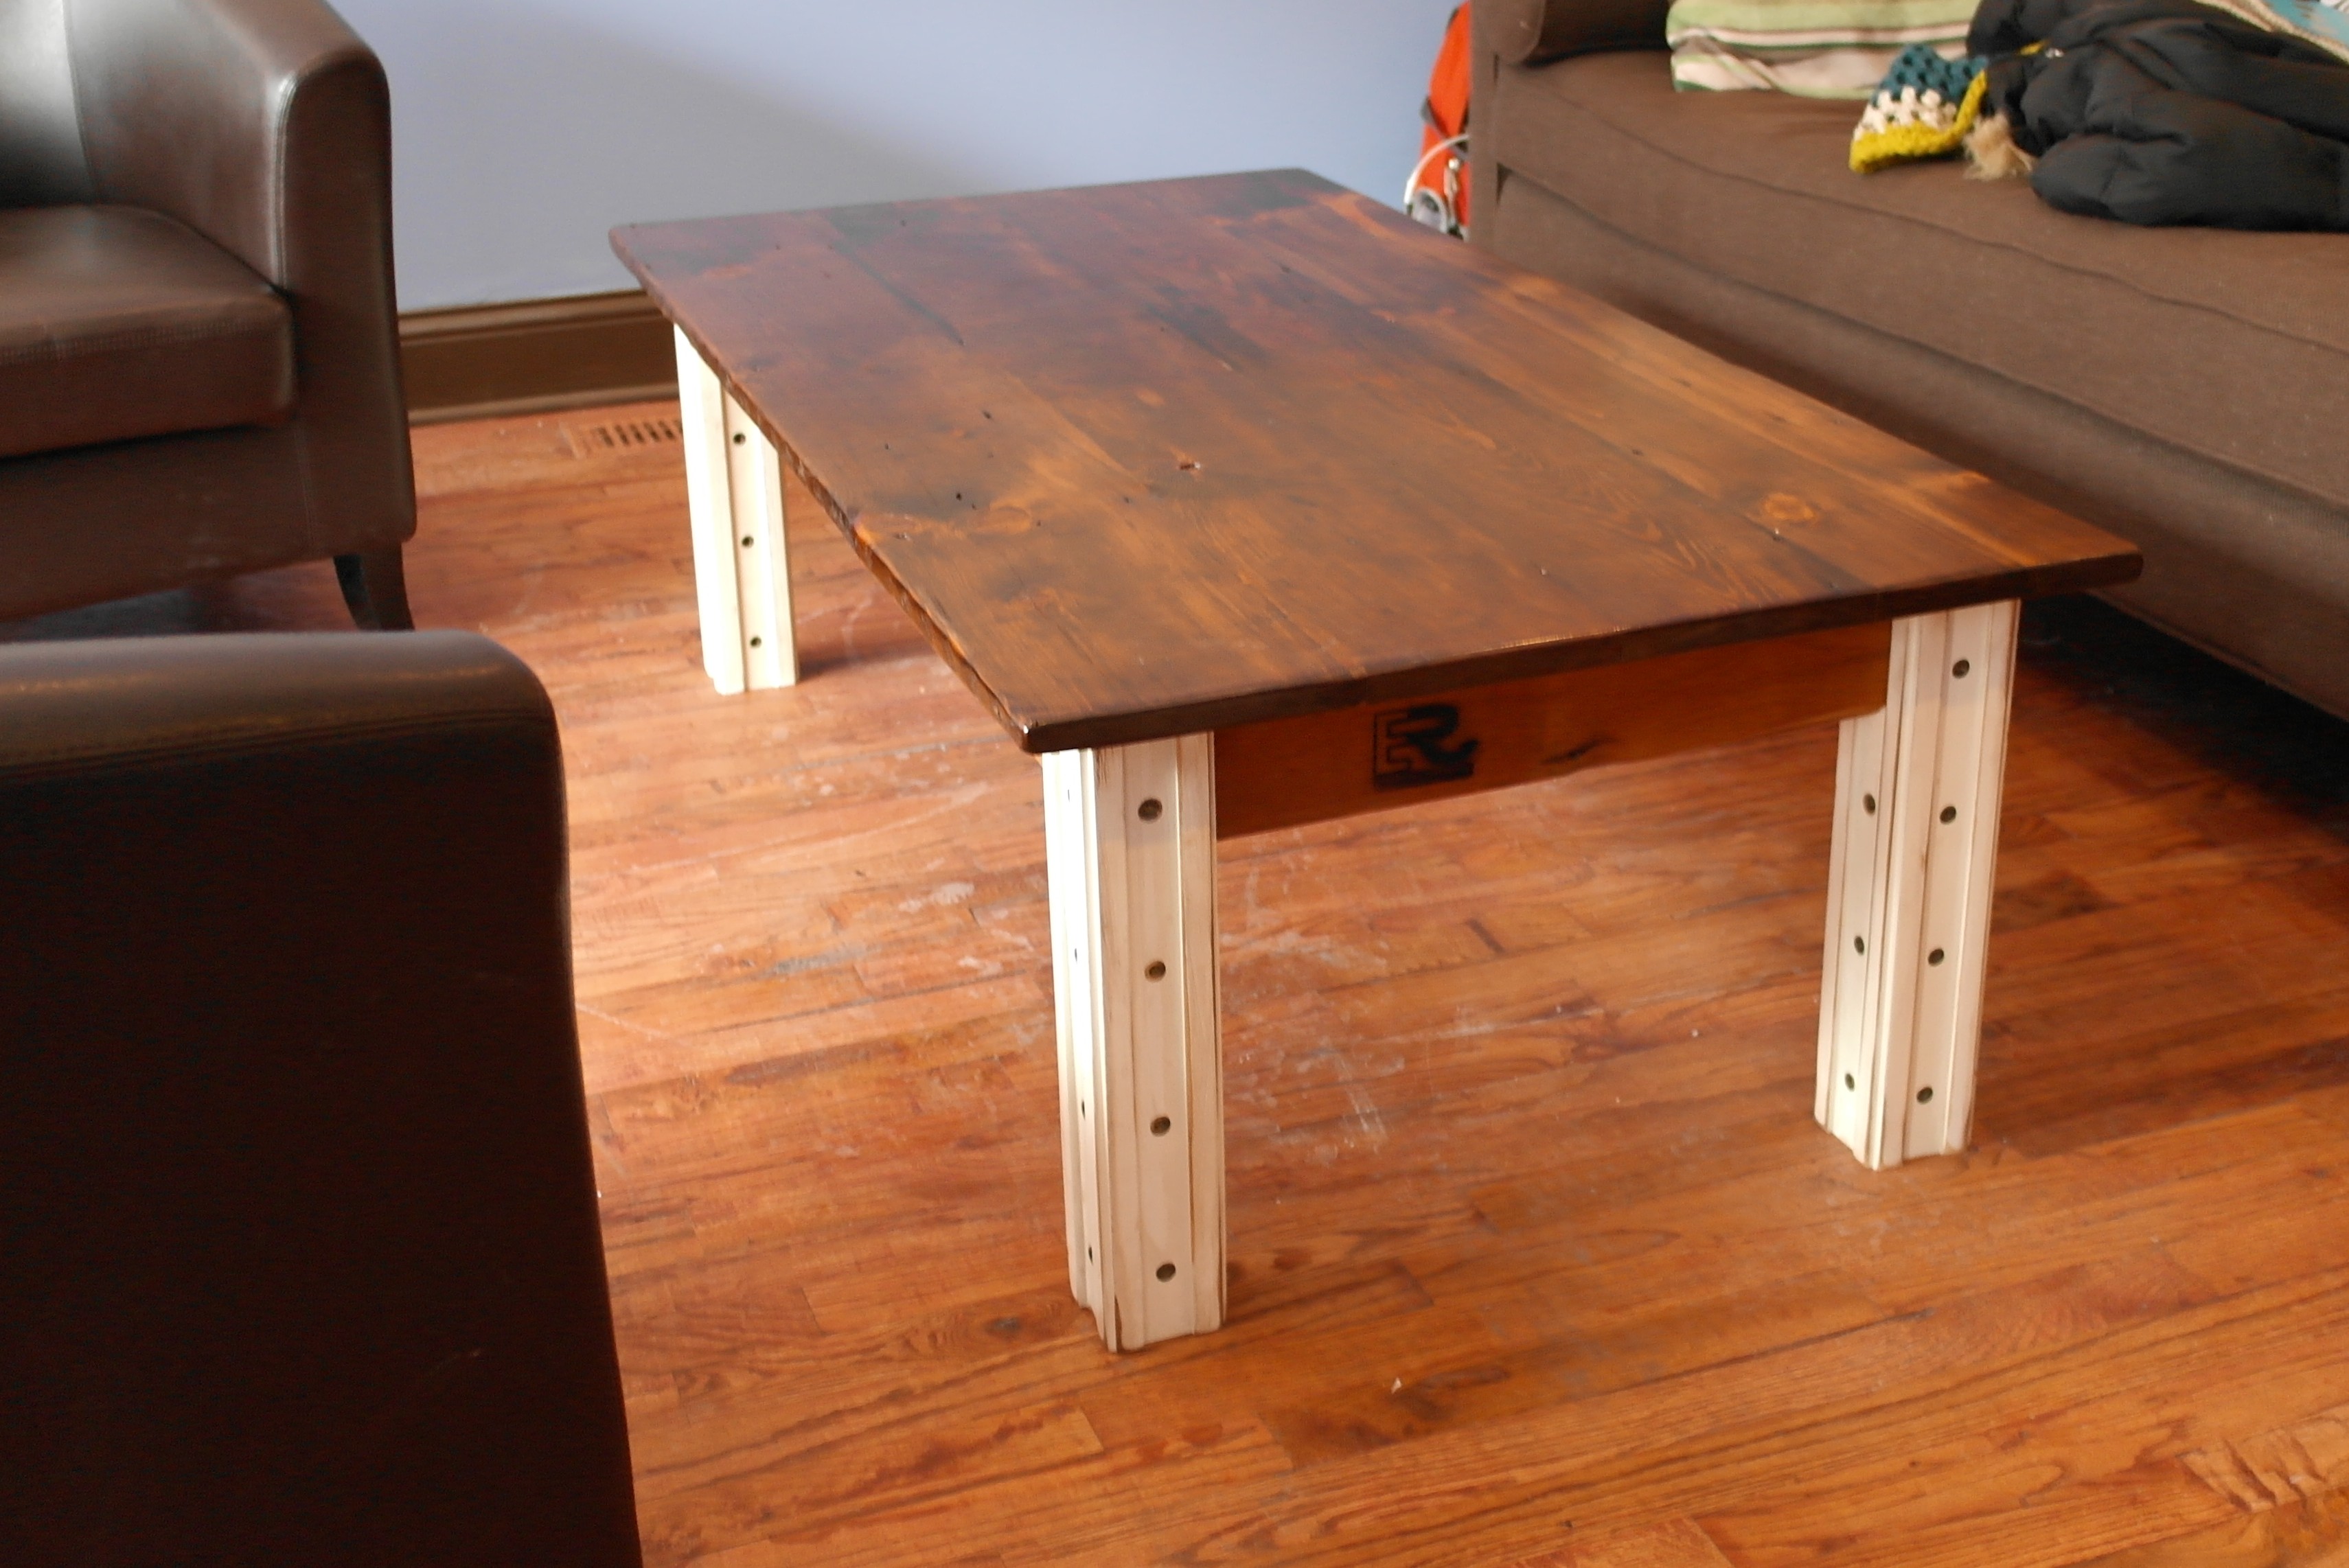 Woodworking table leg design